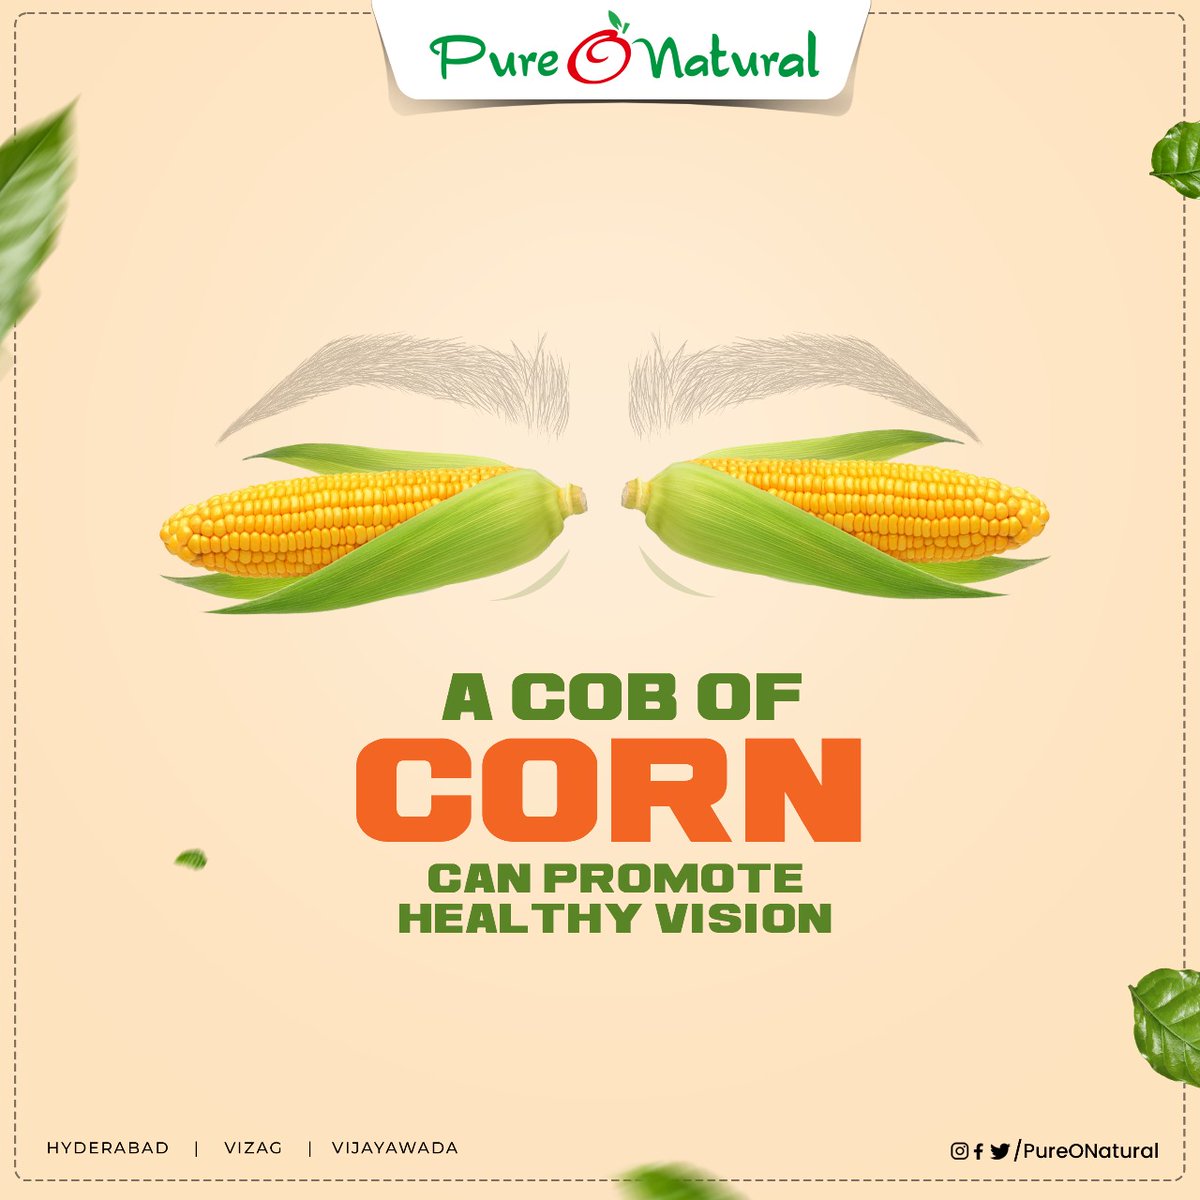 A cob of corn, can promote a healthy vision 🌽

#PureONatural #Vijaywada #Vishakhapatnam #Hyderabad #Corn #Eye #CornBenefits